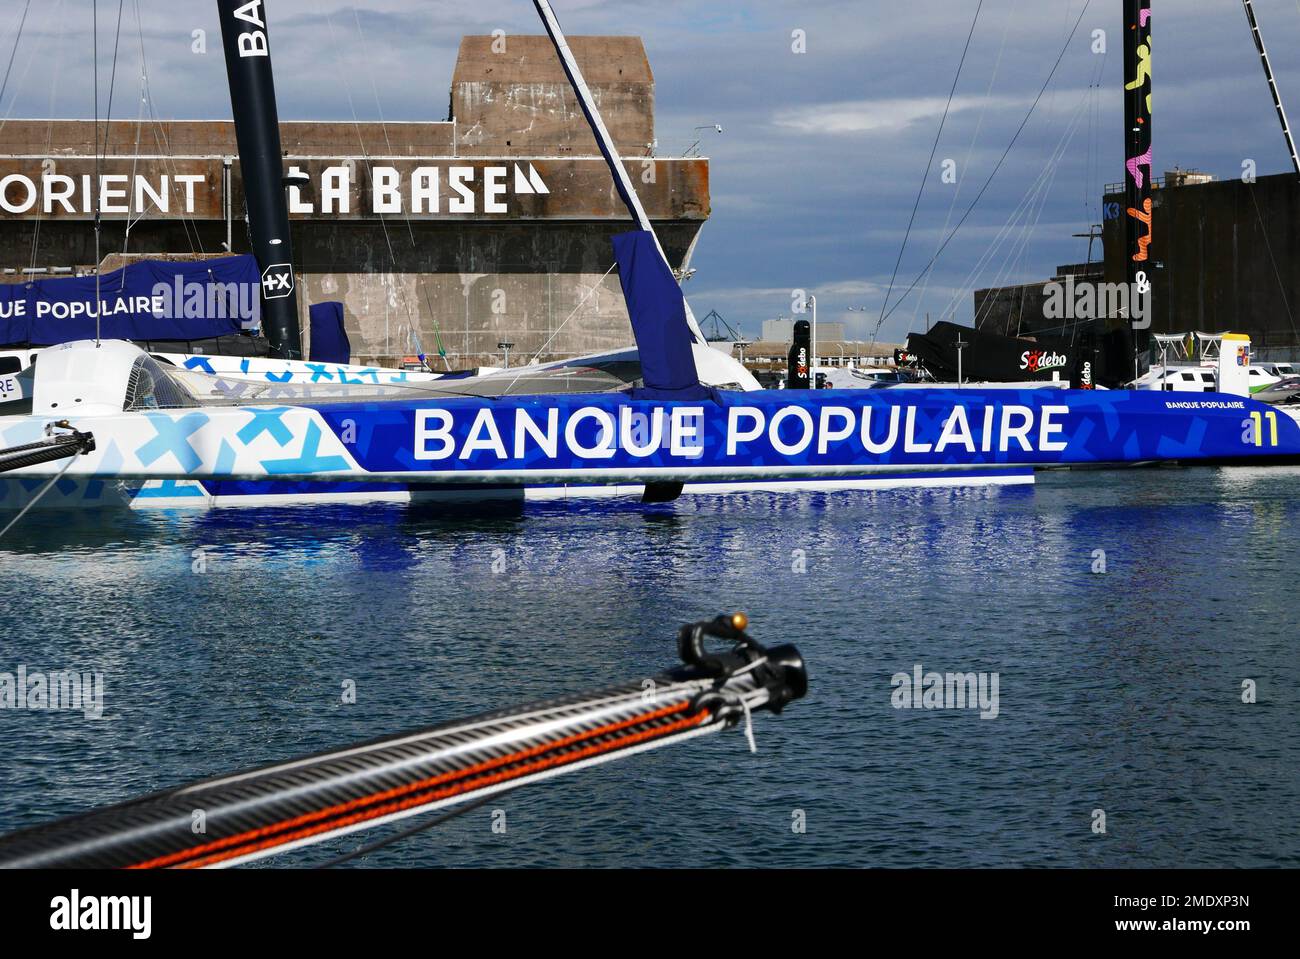 Lorient, Maxi Banque Populaire, La Base, Keroman Submarine base, Morbihan, Bretagne, Brittany, France, Europe Stock Photo